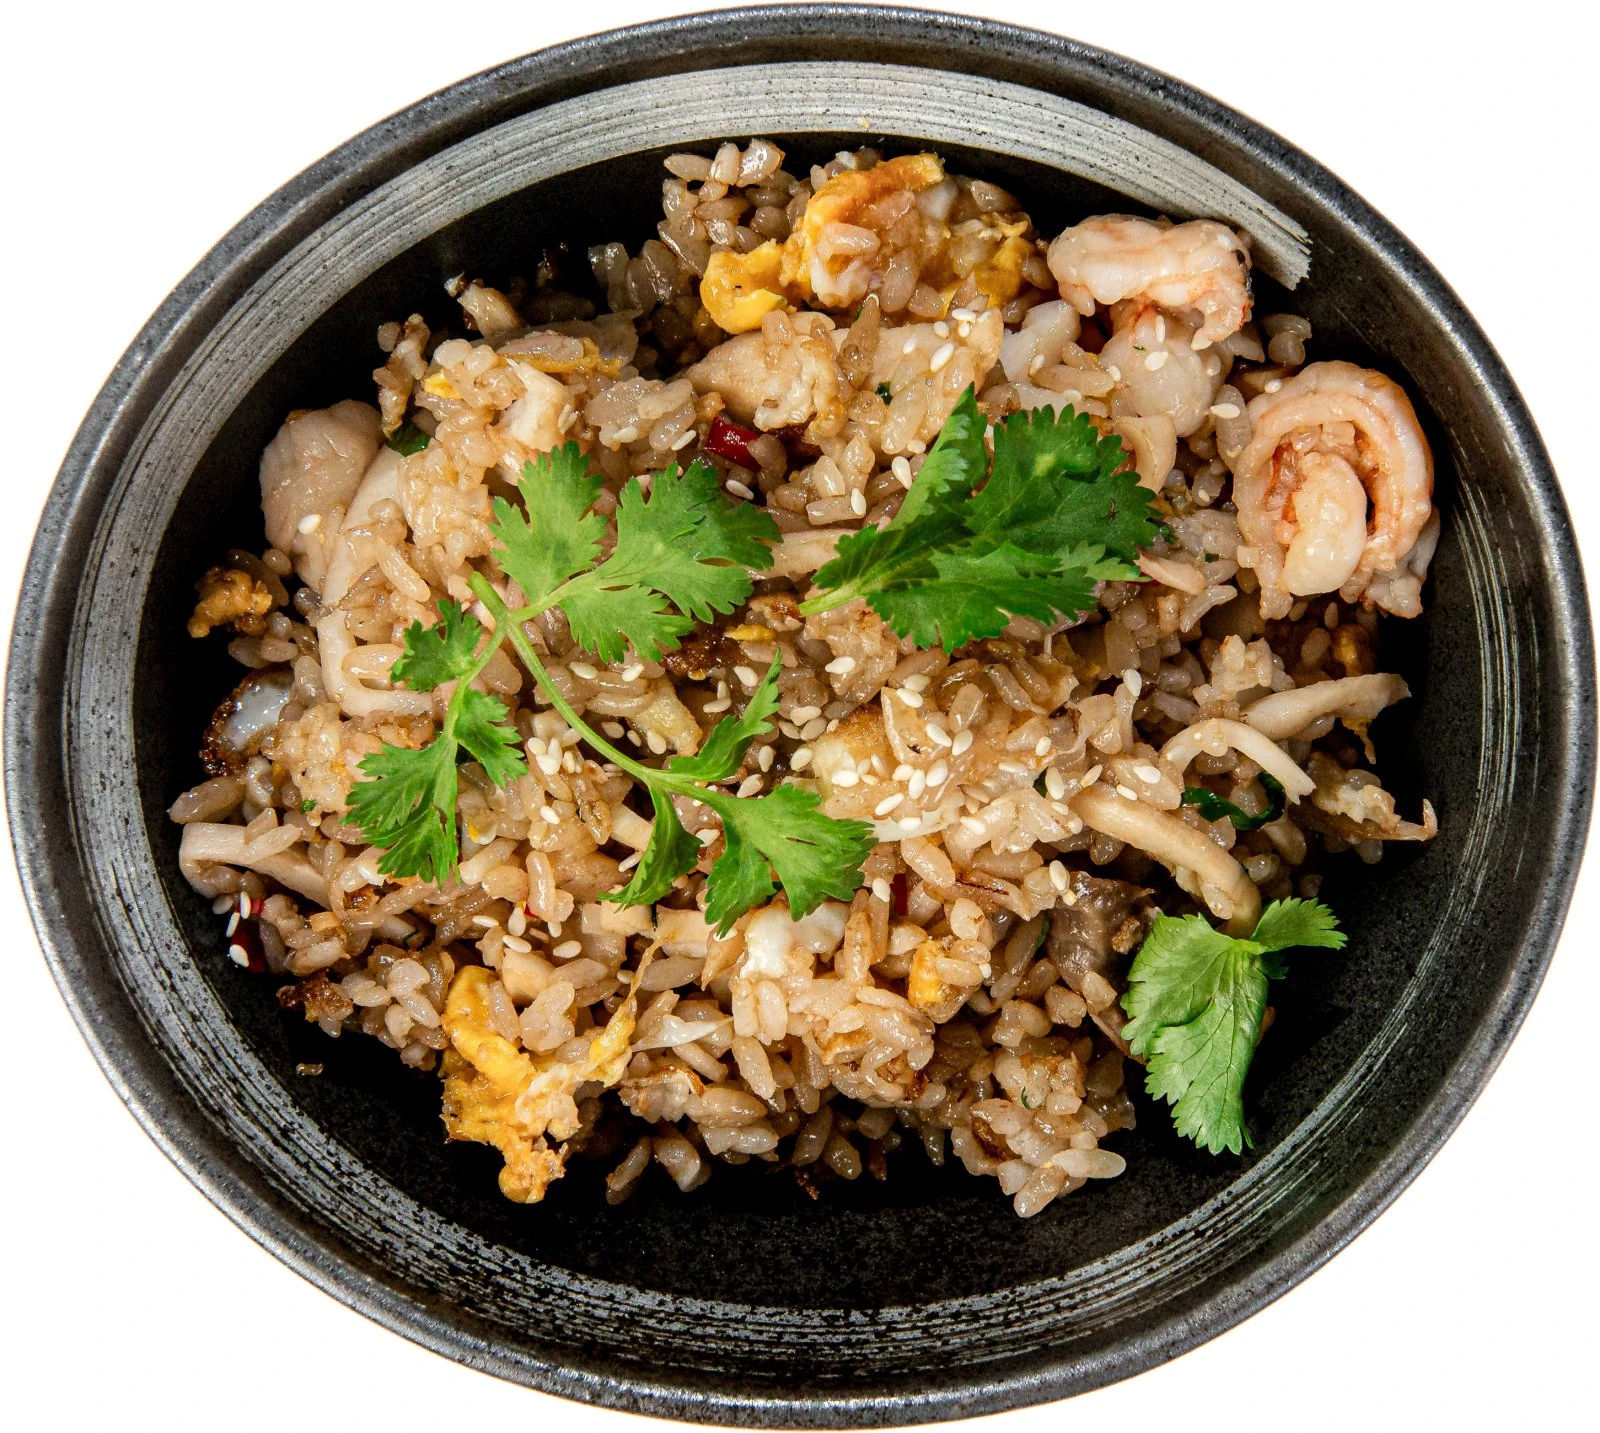 Азиатский рис с морепродуктами